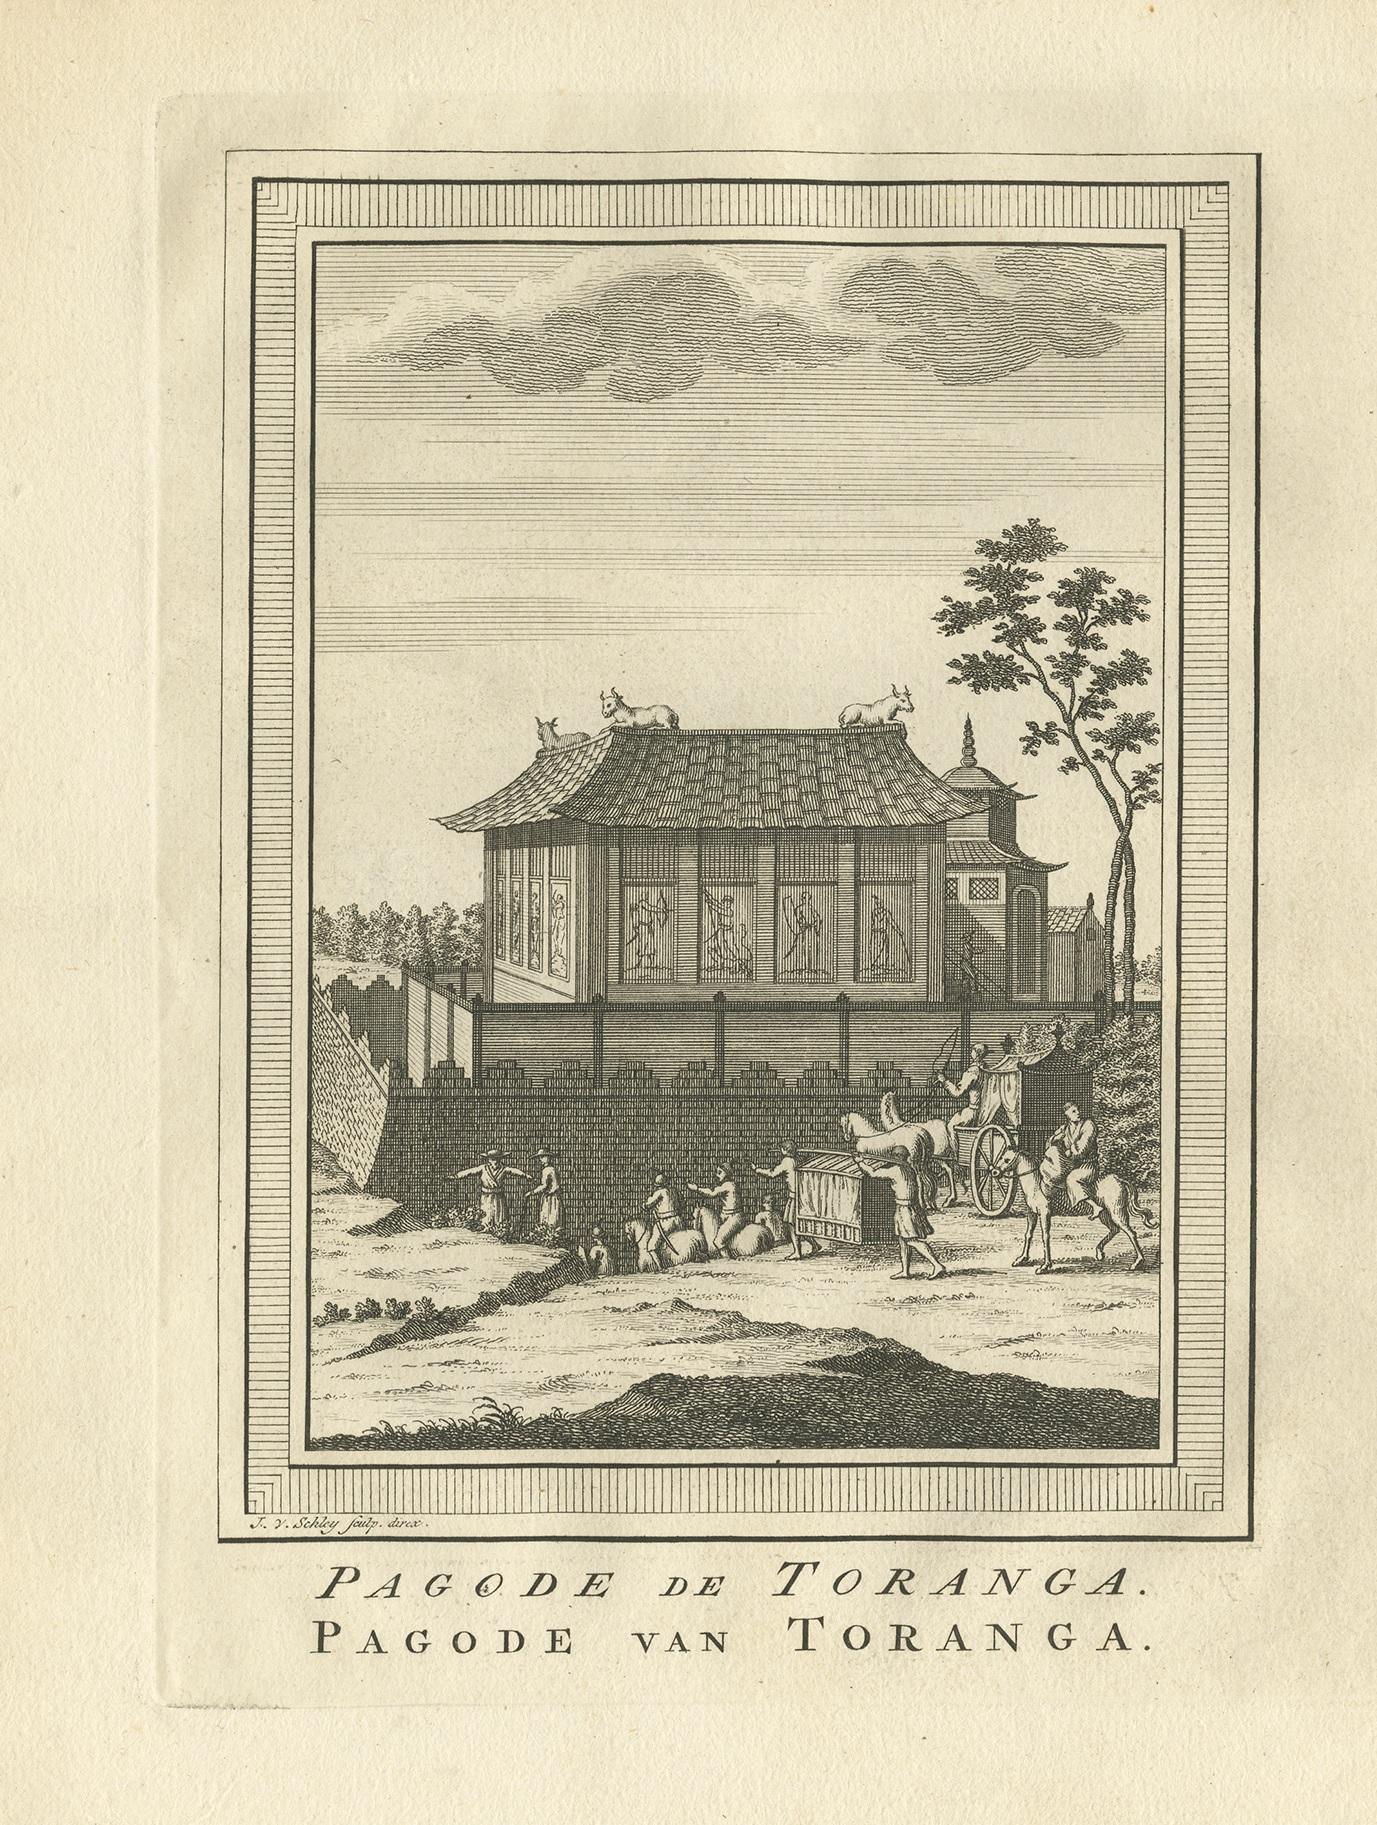 Antique print titled 'Pagode de Toranga - Pagode van Toranga'. Old print depicting the pagoda of Toranga, Japan. This print originates from 'Histoire générale des Voyages' by A. Prévost.